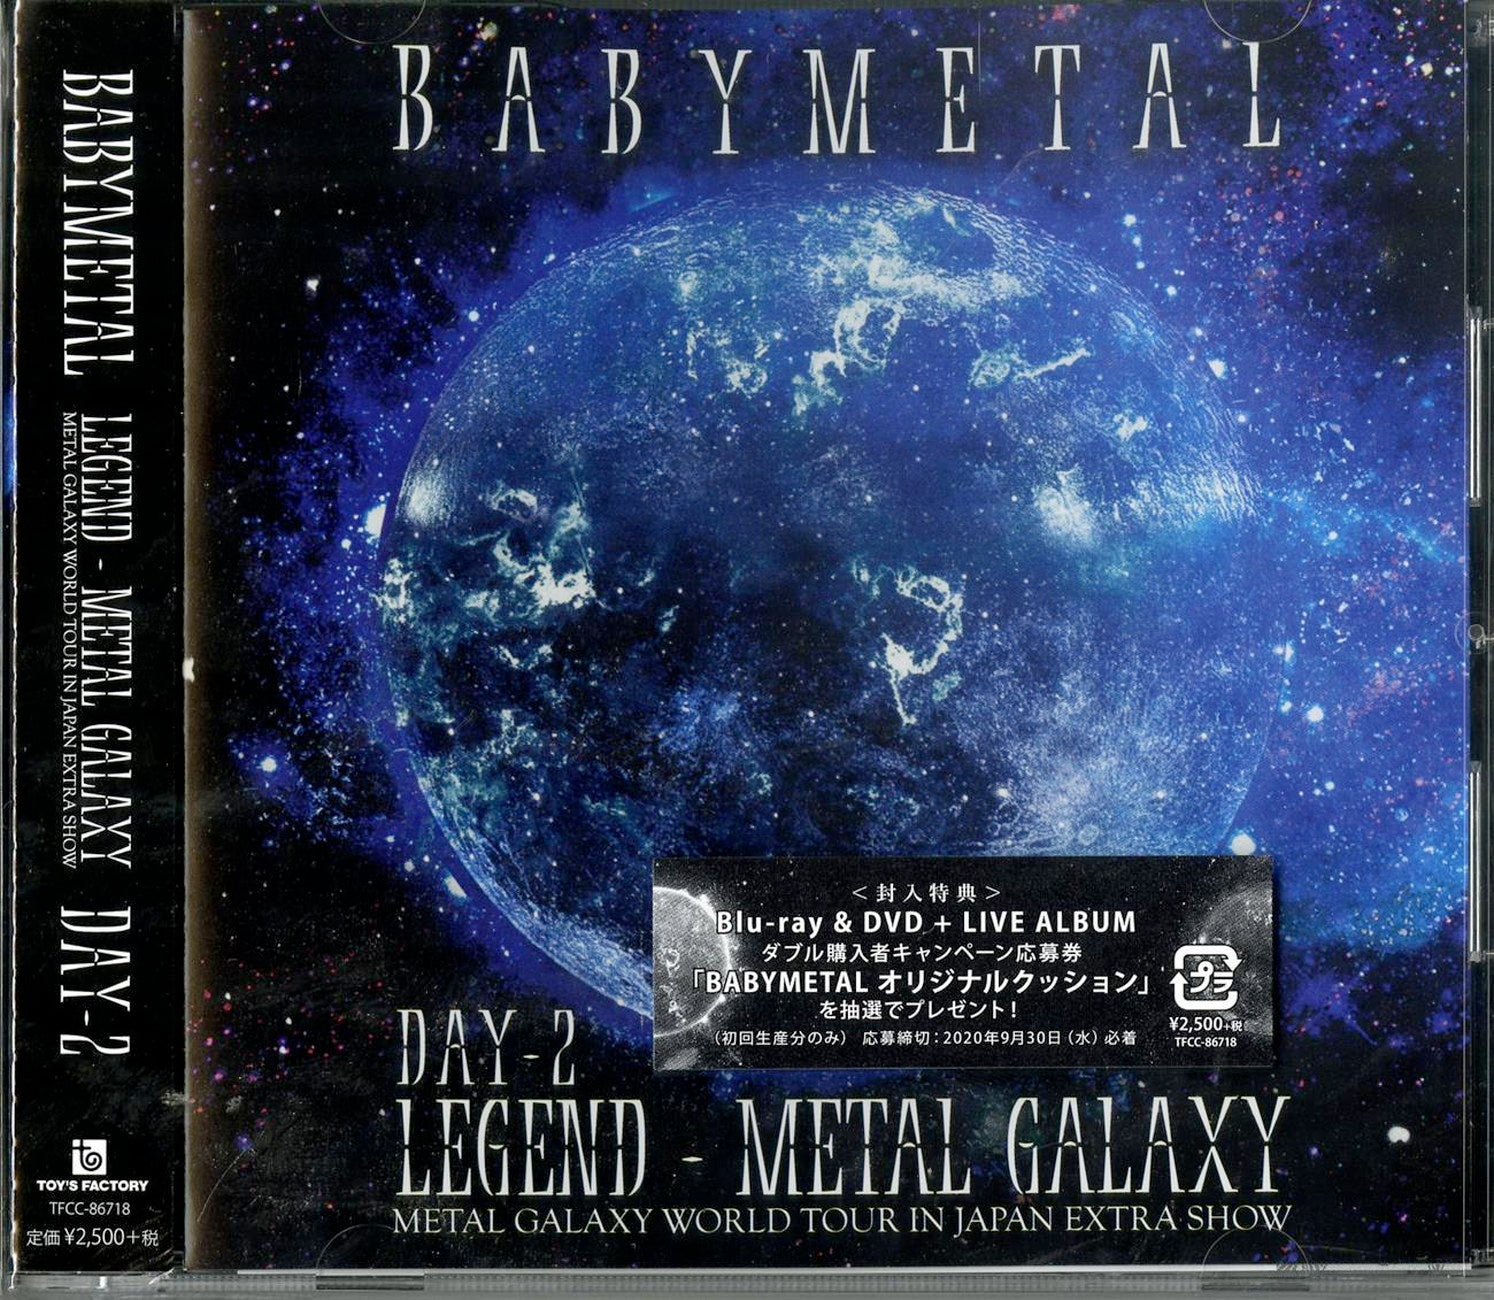 Babymetal - Live Album: Legend - Metal Galaxy [Day-2] (Metal